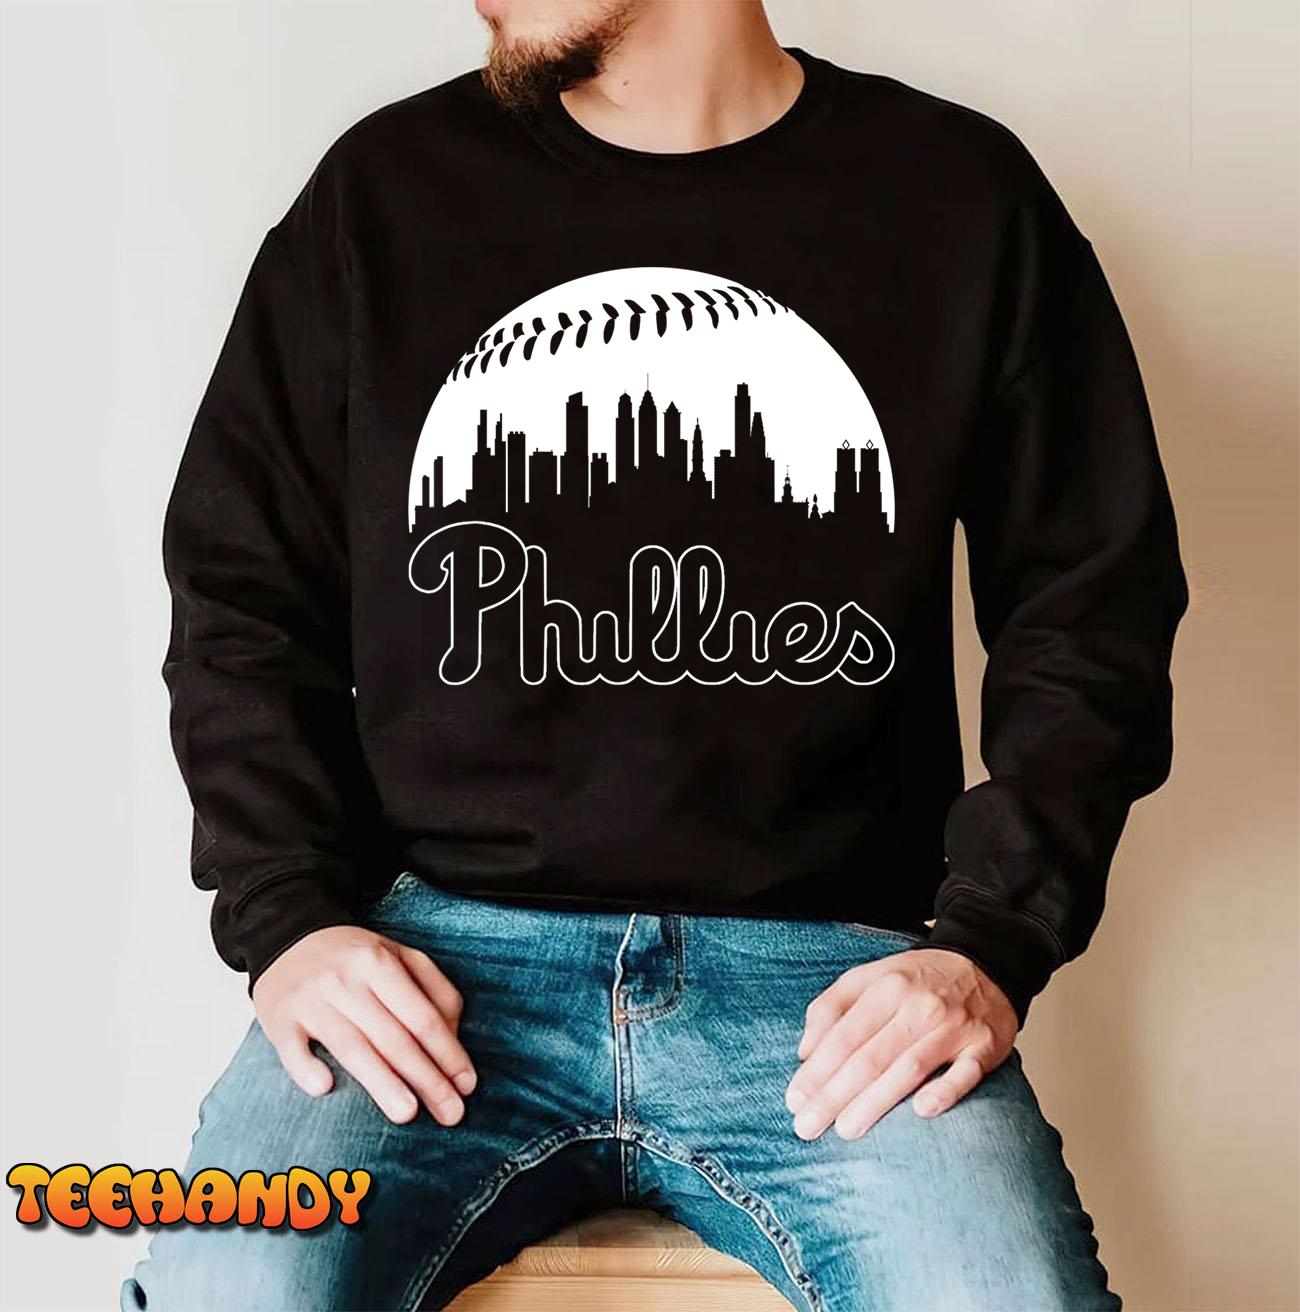 Retro Philadelphia Baseball Vintage Philly Swoosh T-Shirt